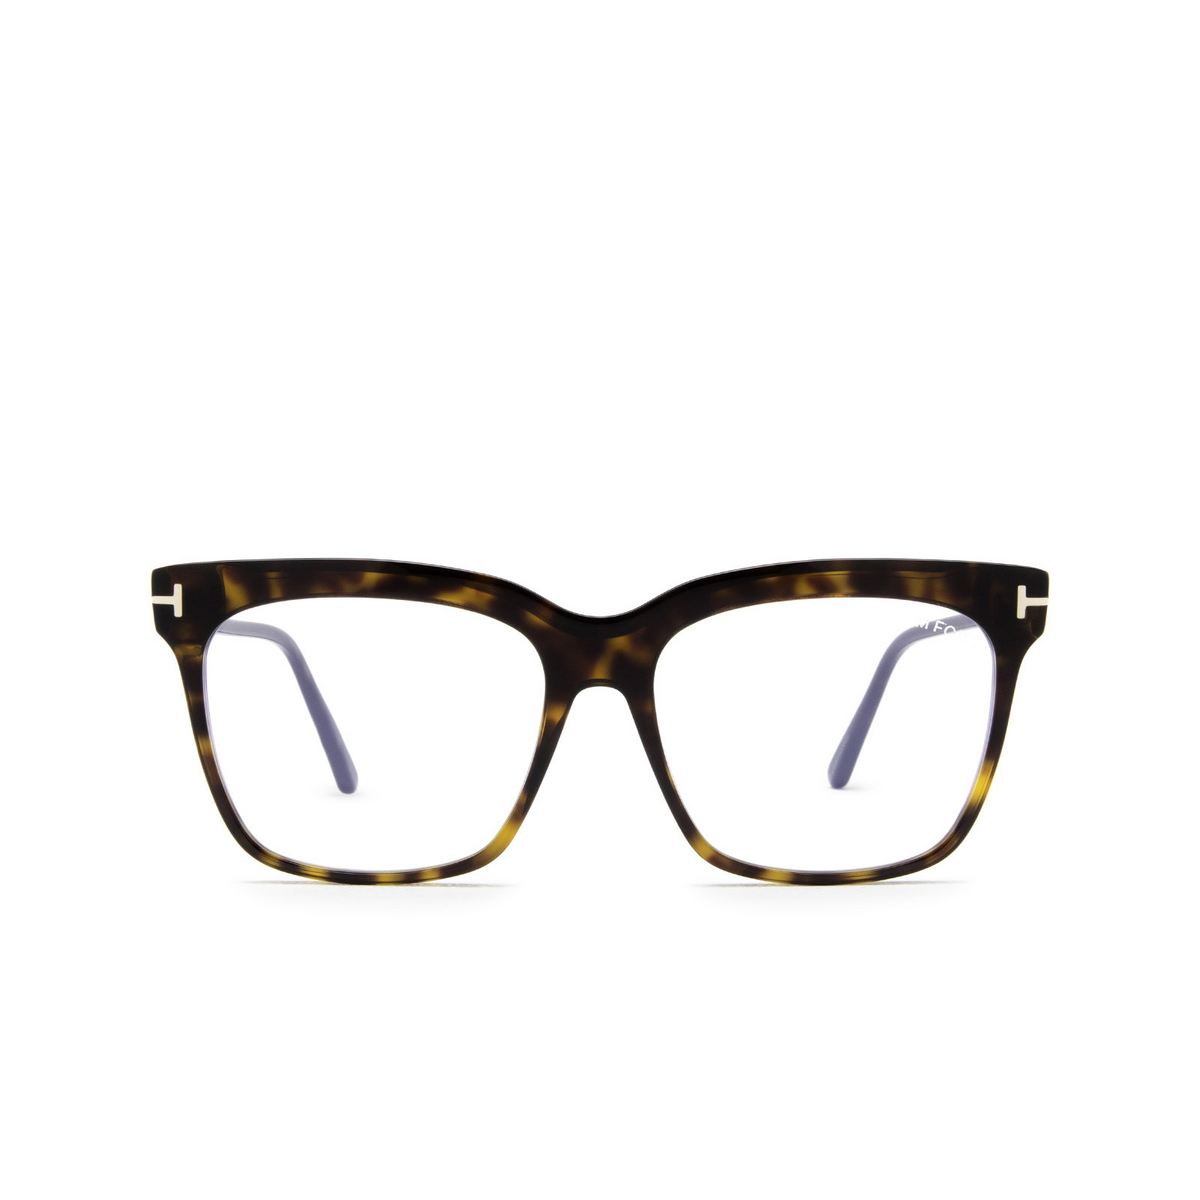 Tom Ford® Square Eyeglasses: FT5768-B color Dark Havana 052 - front view.